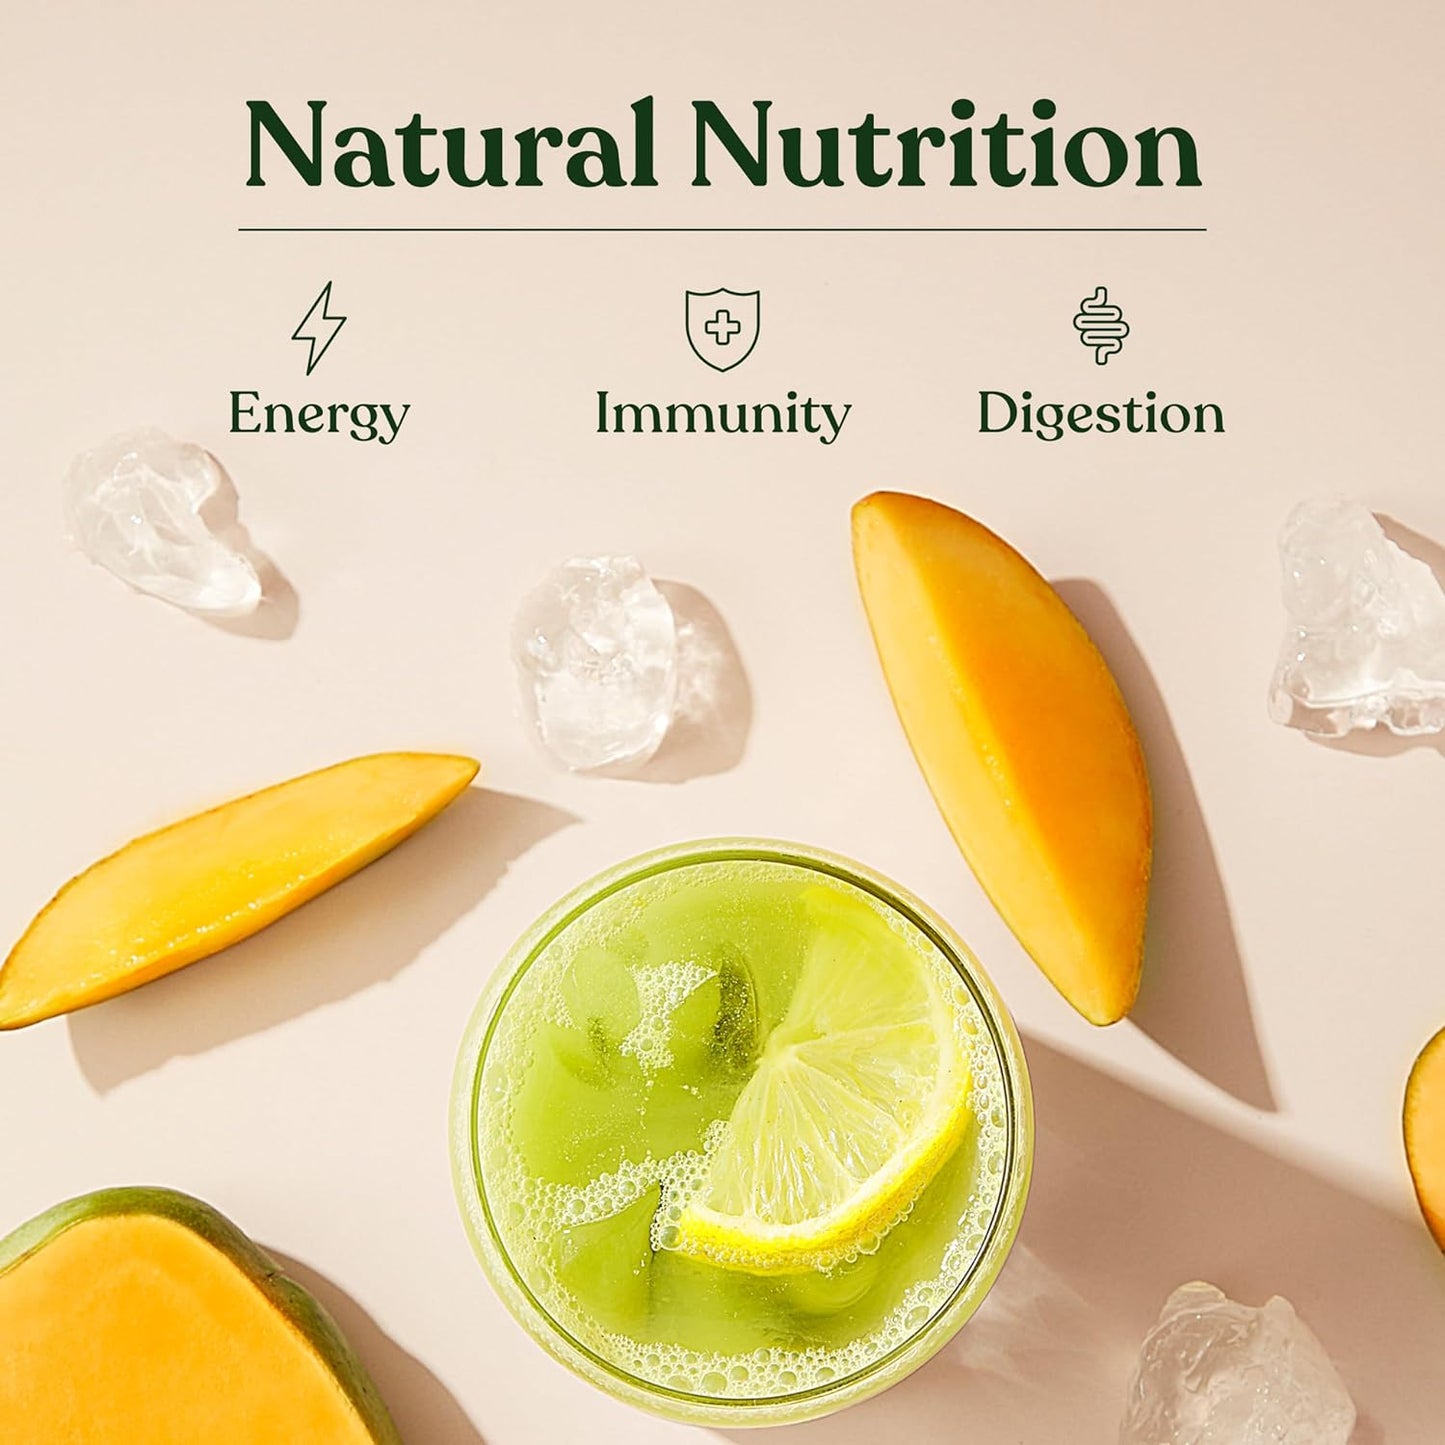 Free Soul Greens – 21 Natural Ingredients | Nutritious Superfoods Blend with Adaptogens Including KSM-66® Ashwagandha | Super Greens Powder Vegan & Gluten-Free 30 servings